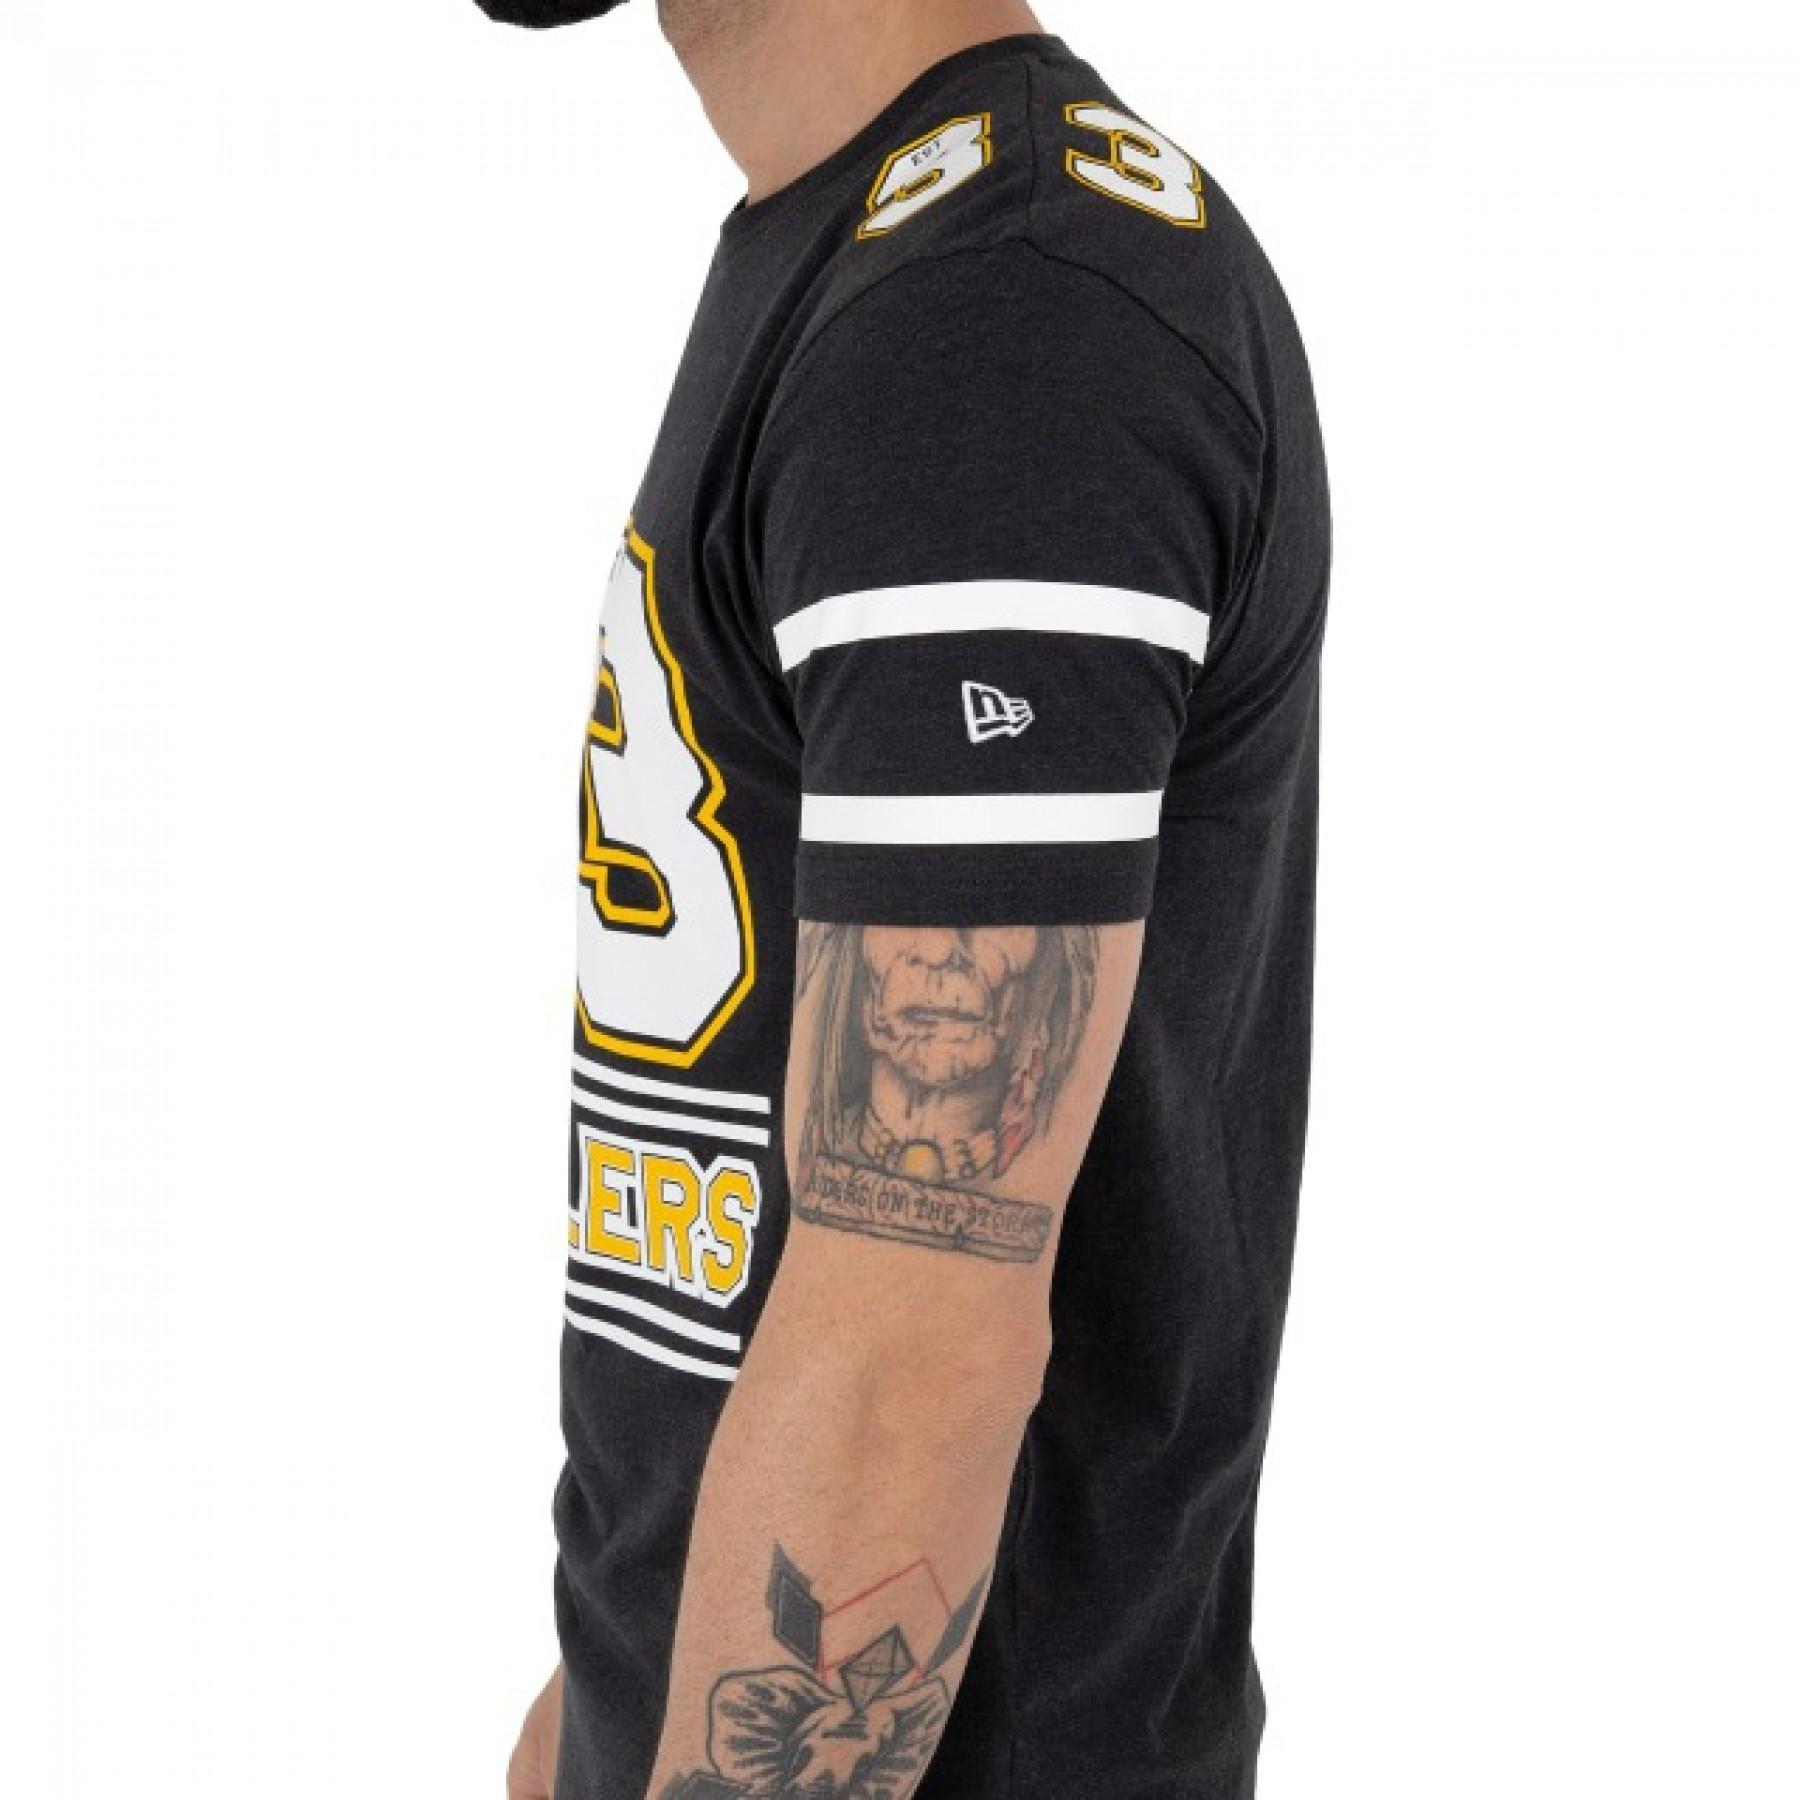 T-shirt New Era Steelers Established